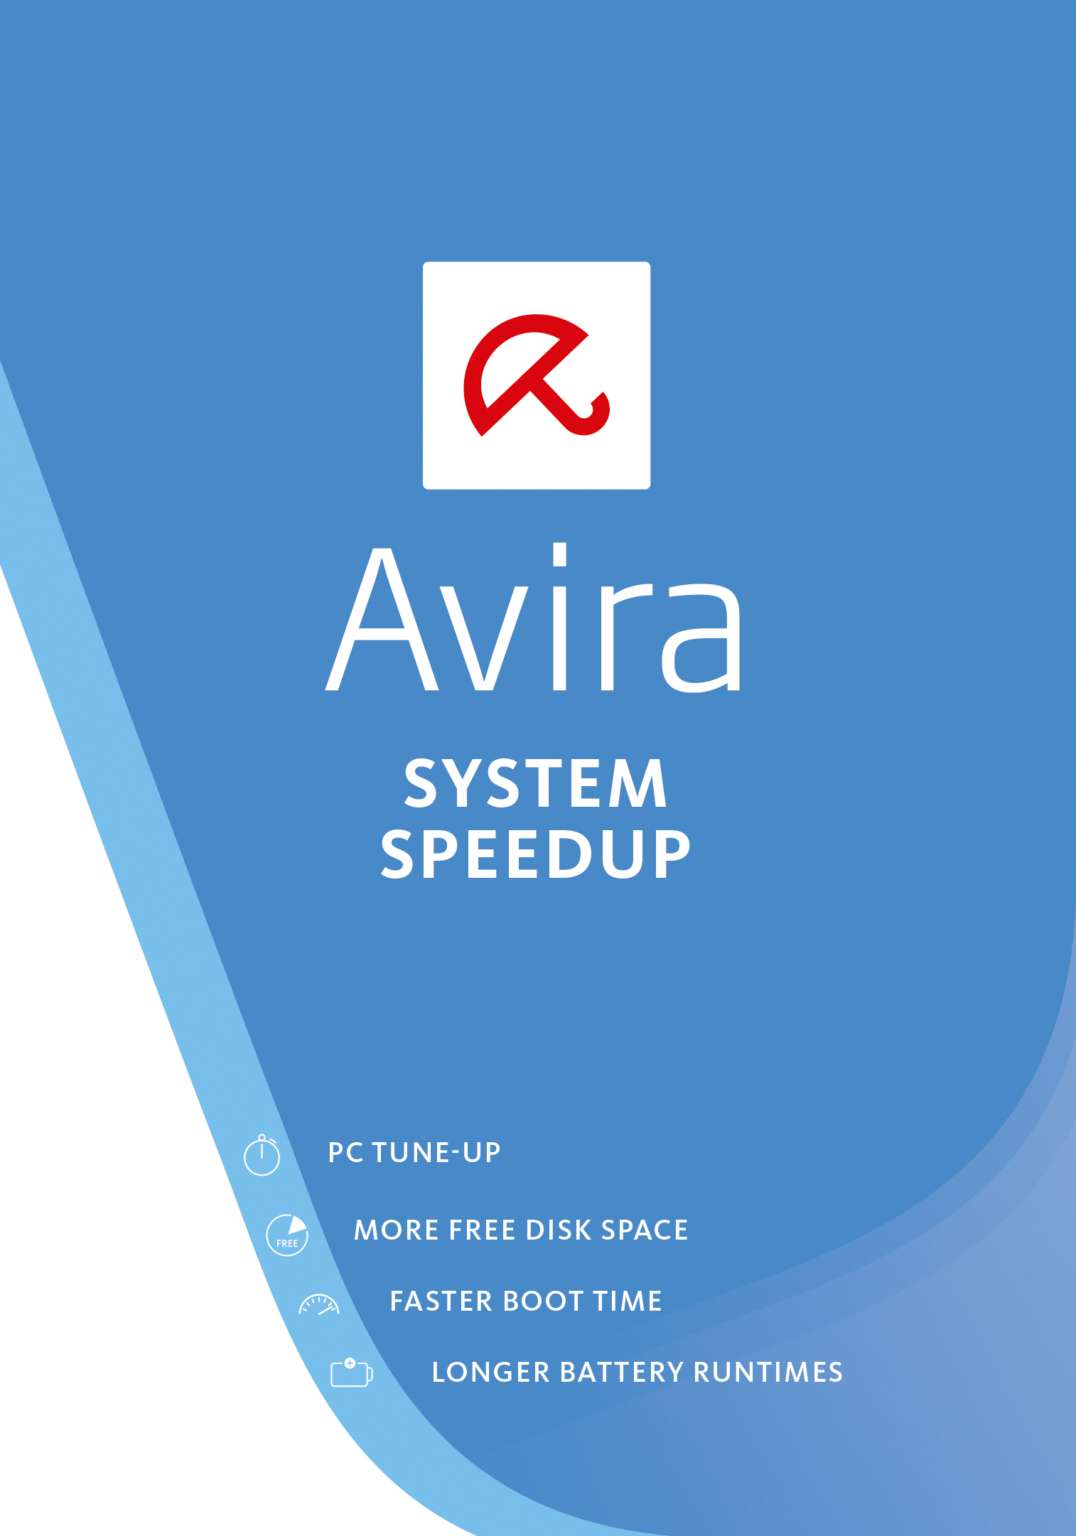 Avira System Speedup Pro 6.26.0.18 instal the new version for apple